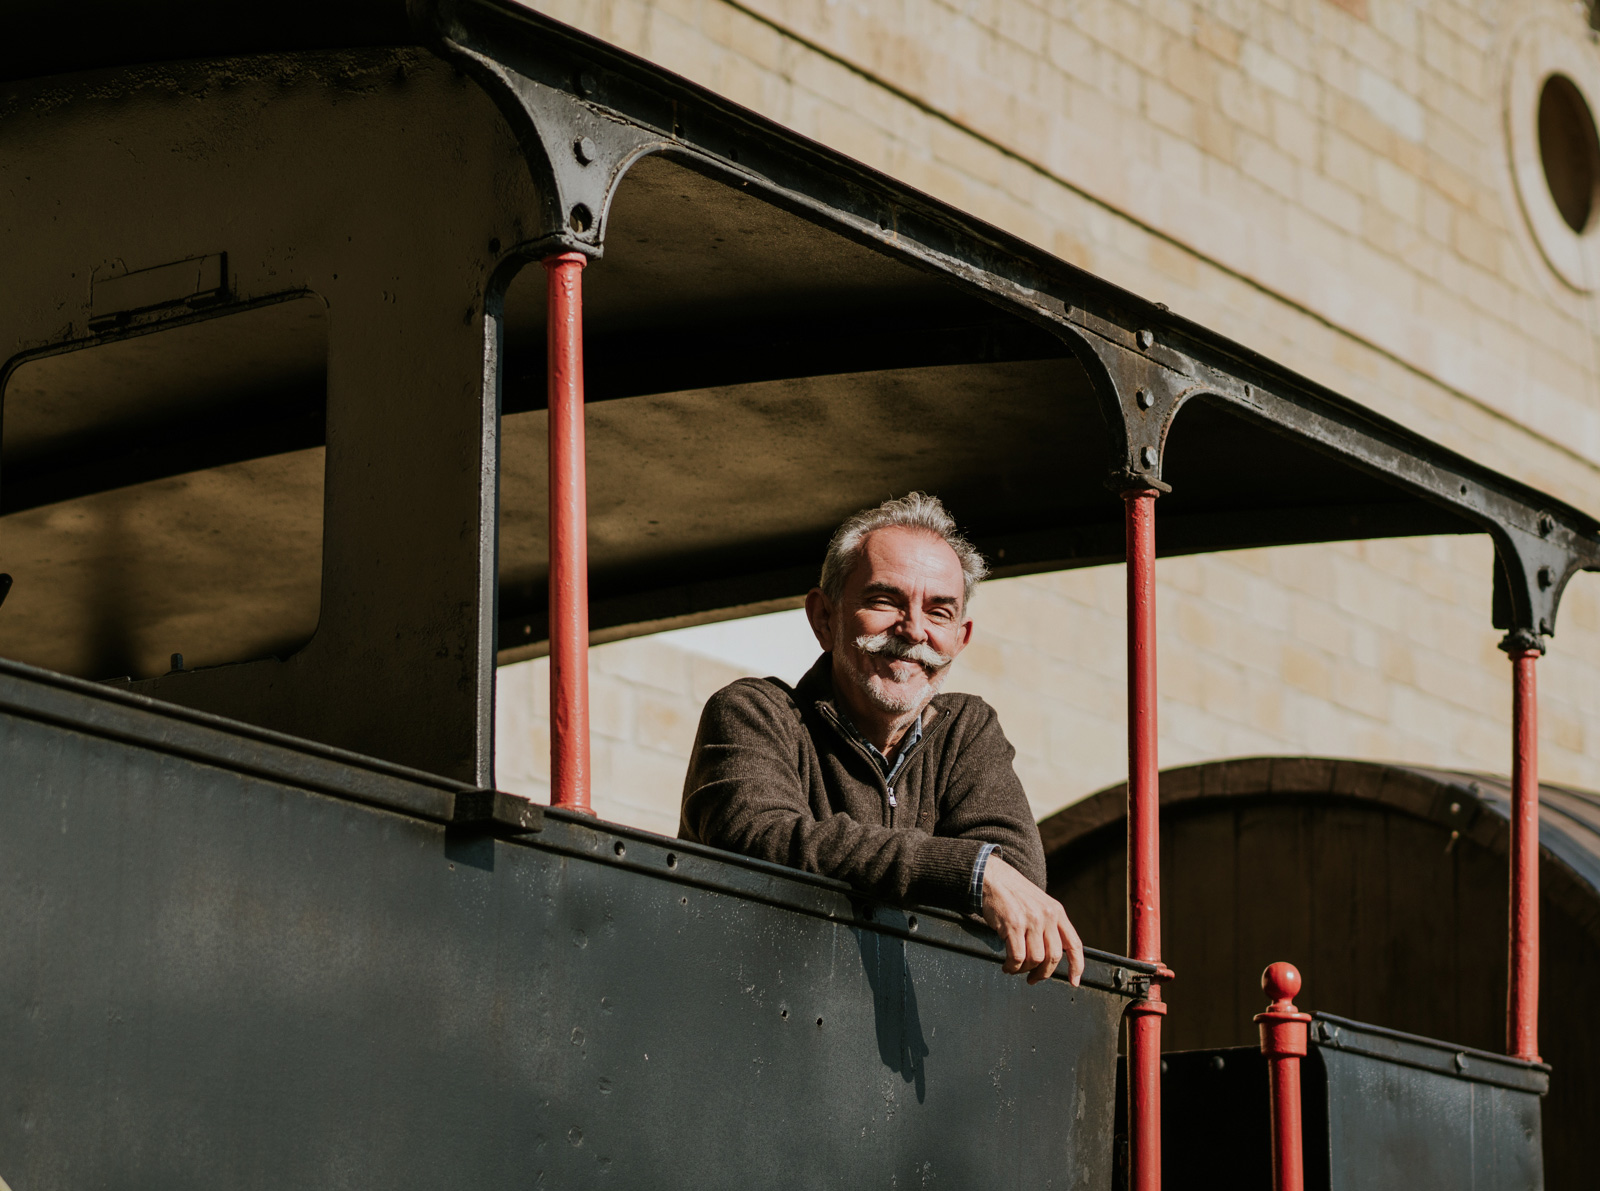 Luis Gutiérrez will journey through time over seven decades with a musical tasting of the wines of the Barrio de la Estación